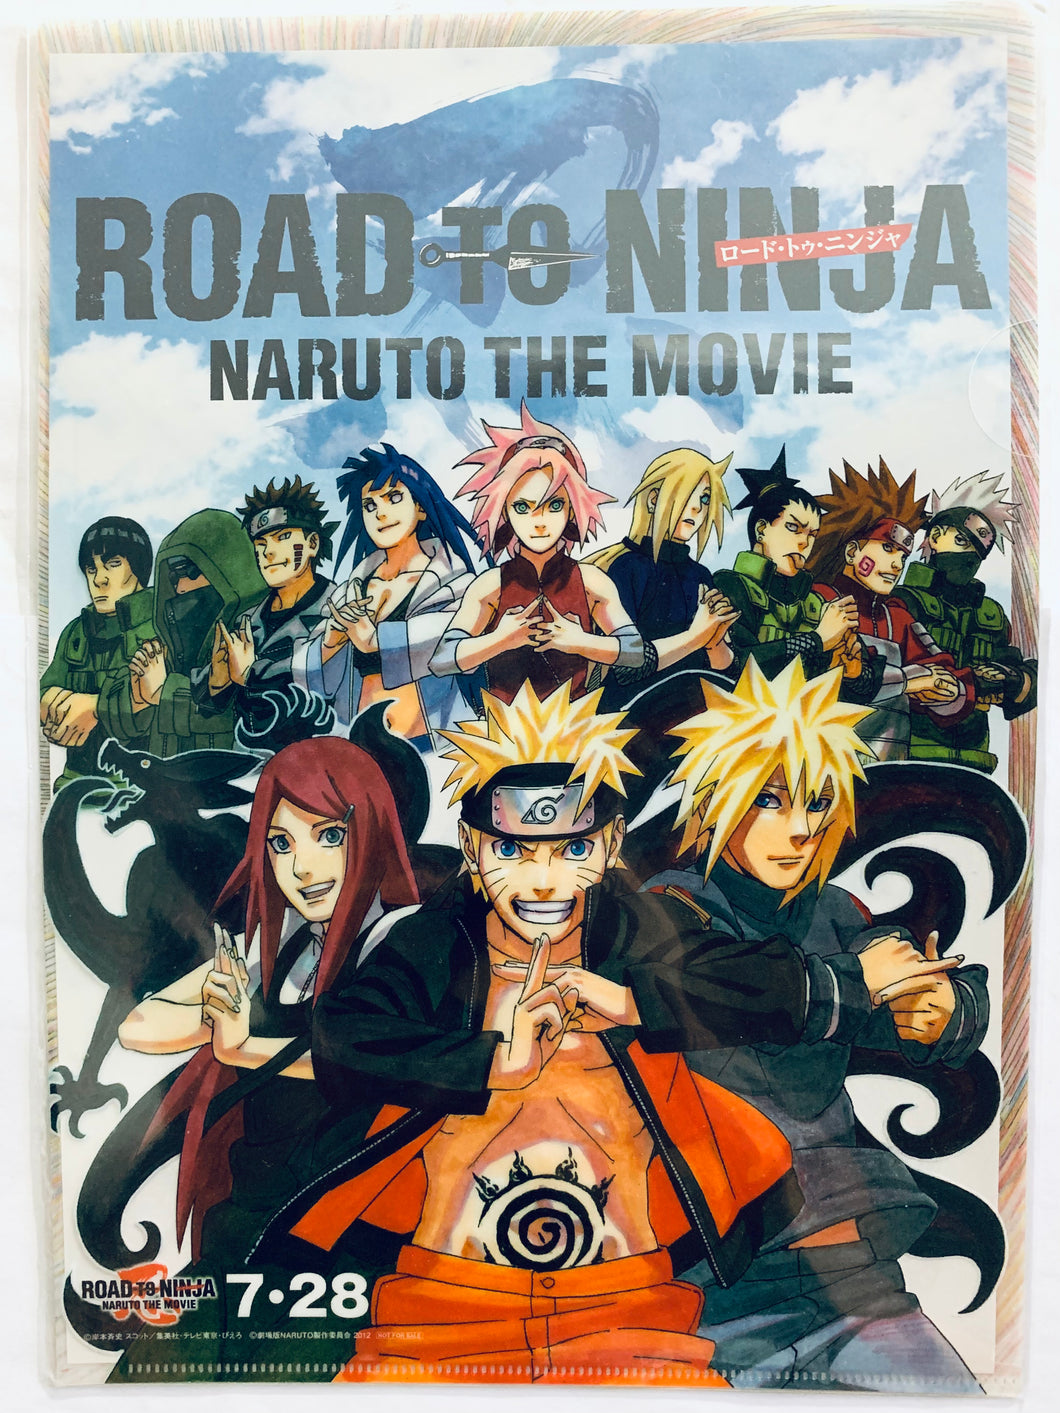 ROAD TO NINJA: NARUTO THE MOVIE (Road to Ninja: Naruto the Movie) · AniList